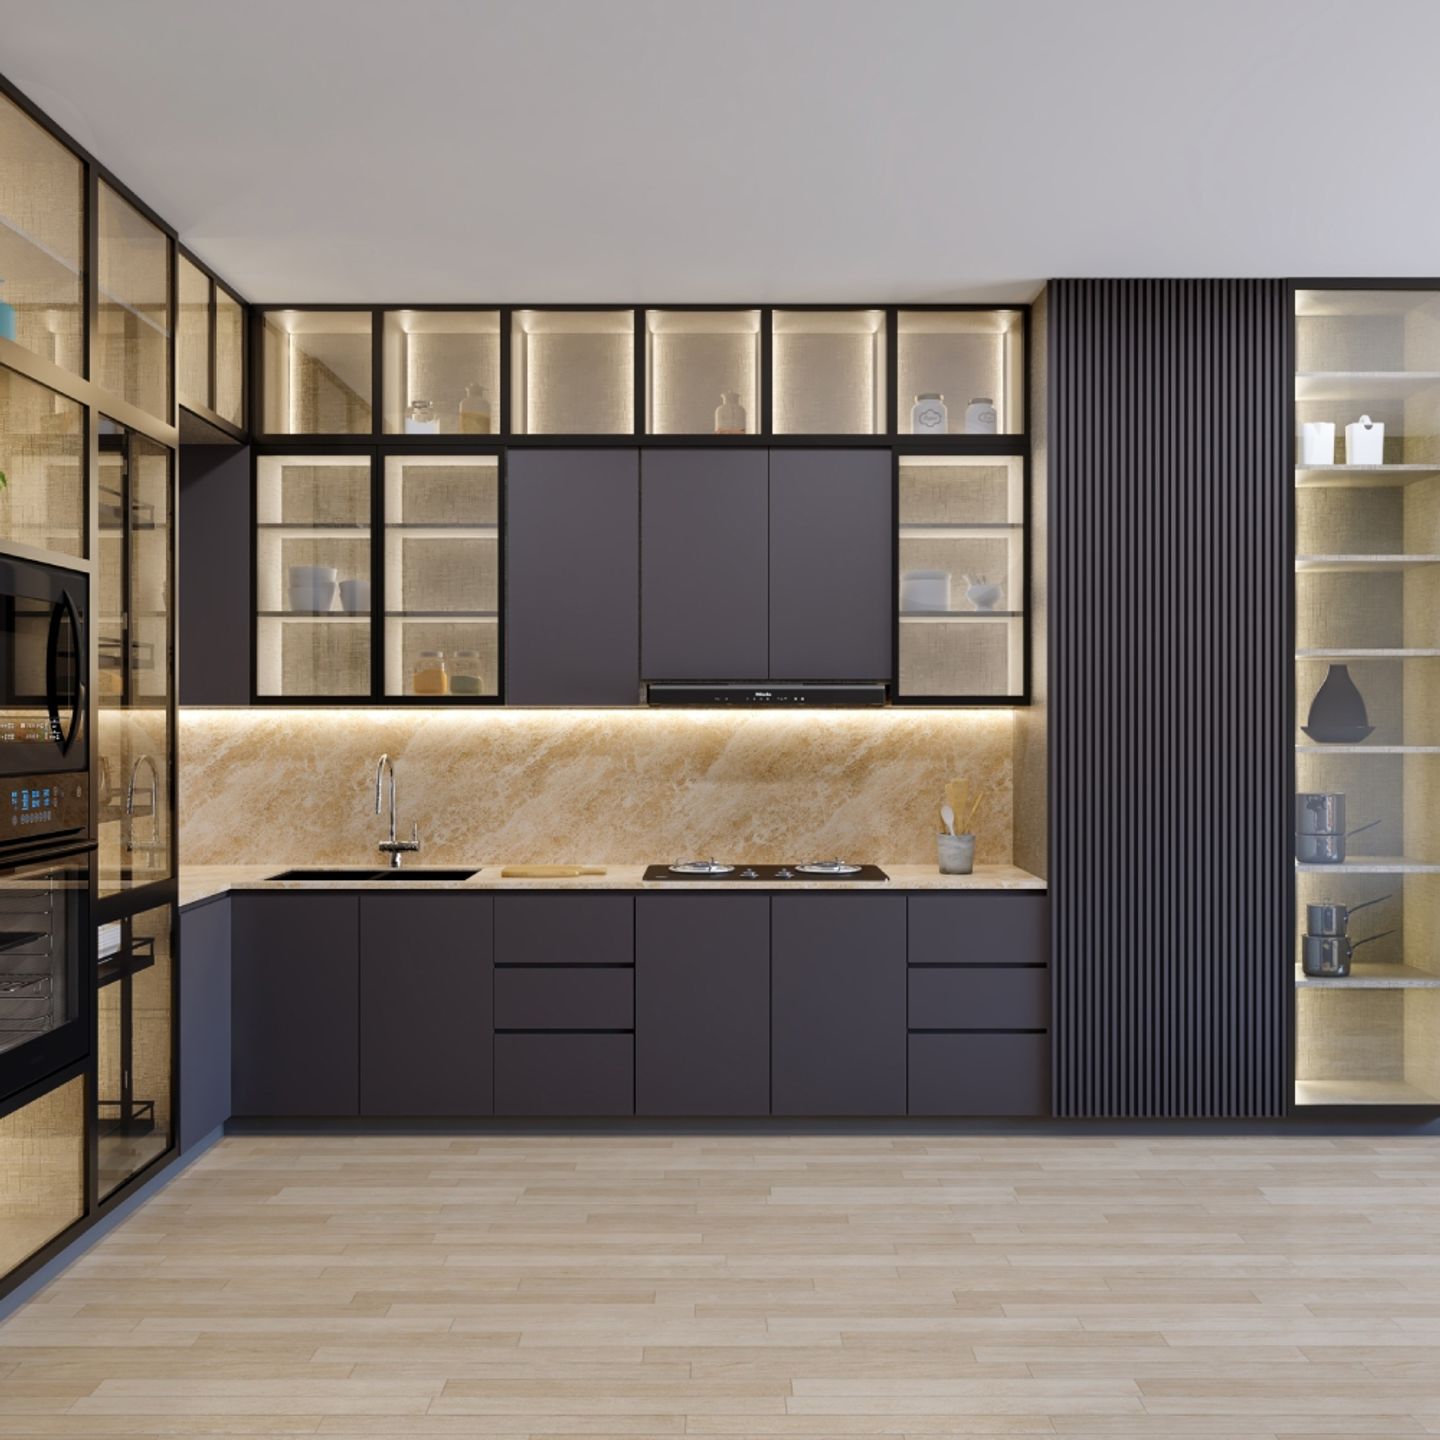 16x15 Ft Grey L Shaped Kitchen Design With Cabinet Lights - Livspace